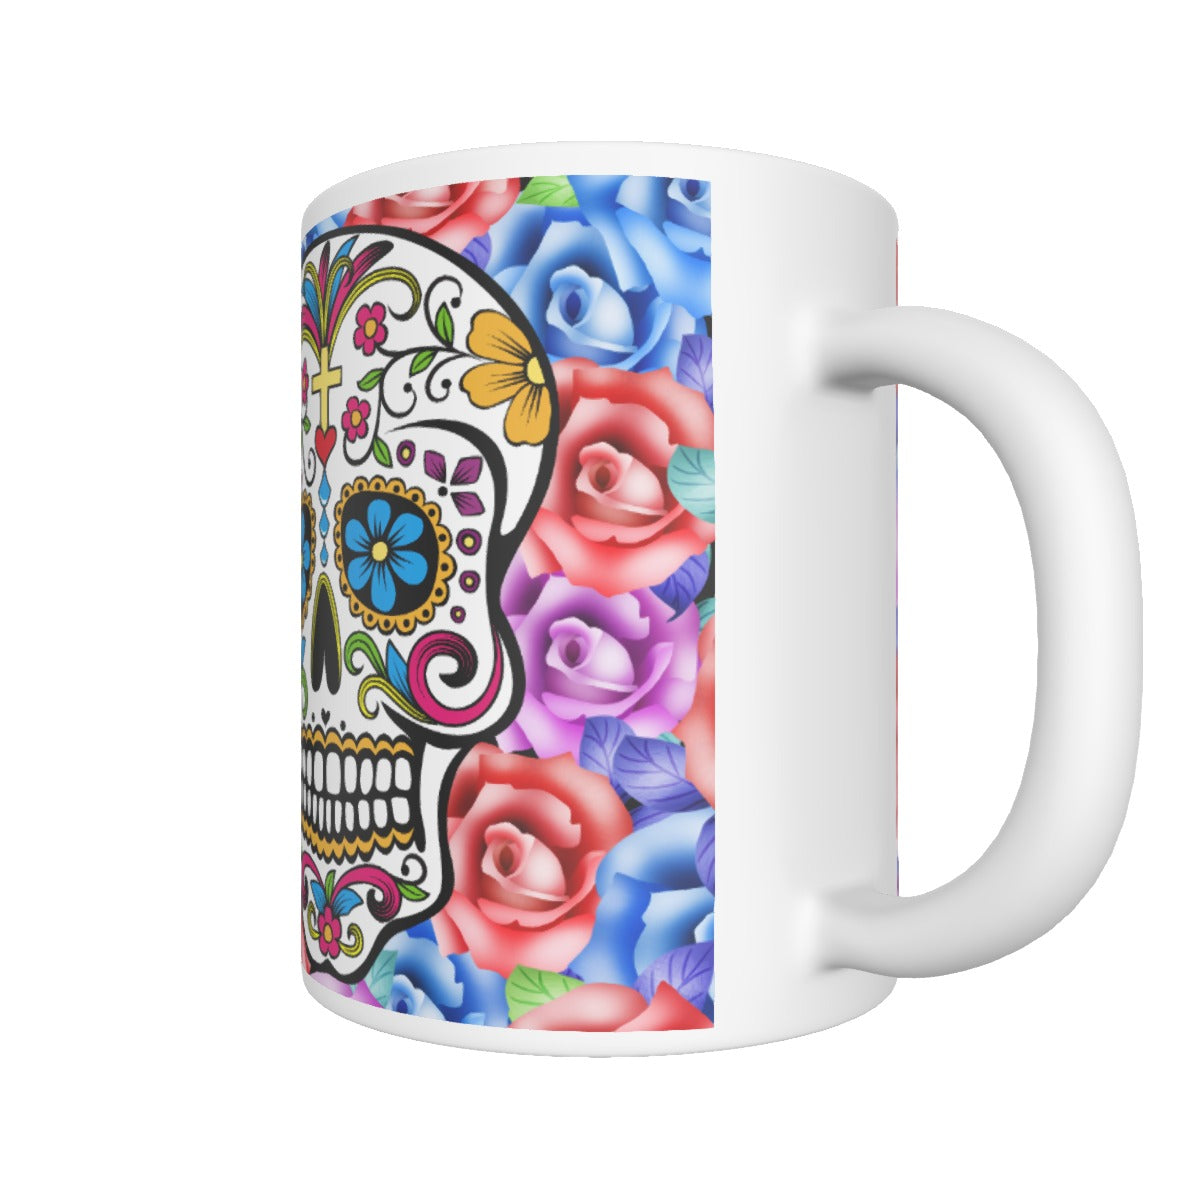 Dia de los muertos sugar skull Ceramics mug